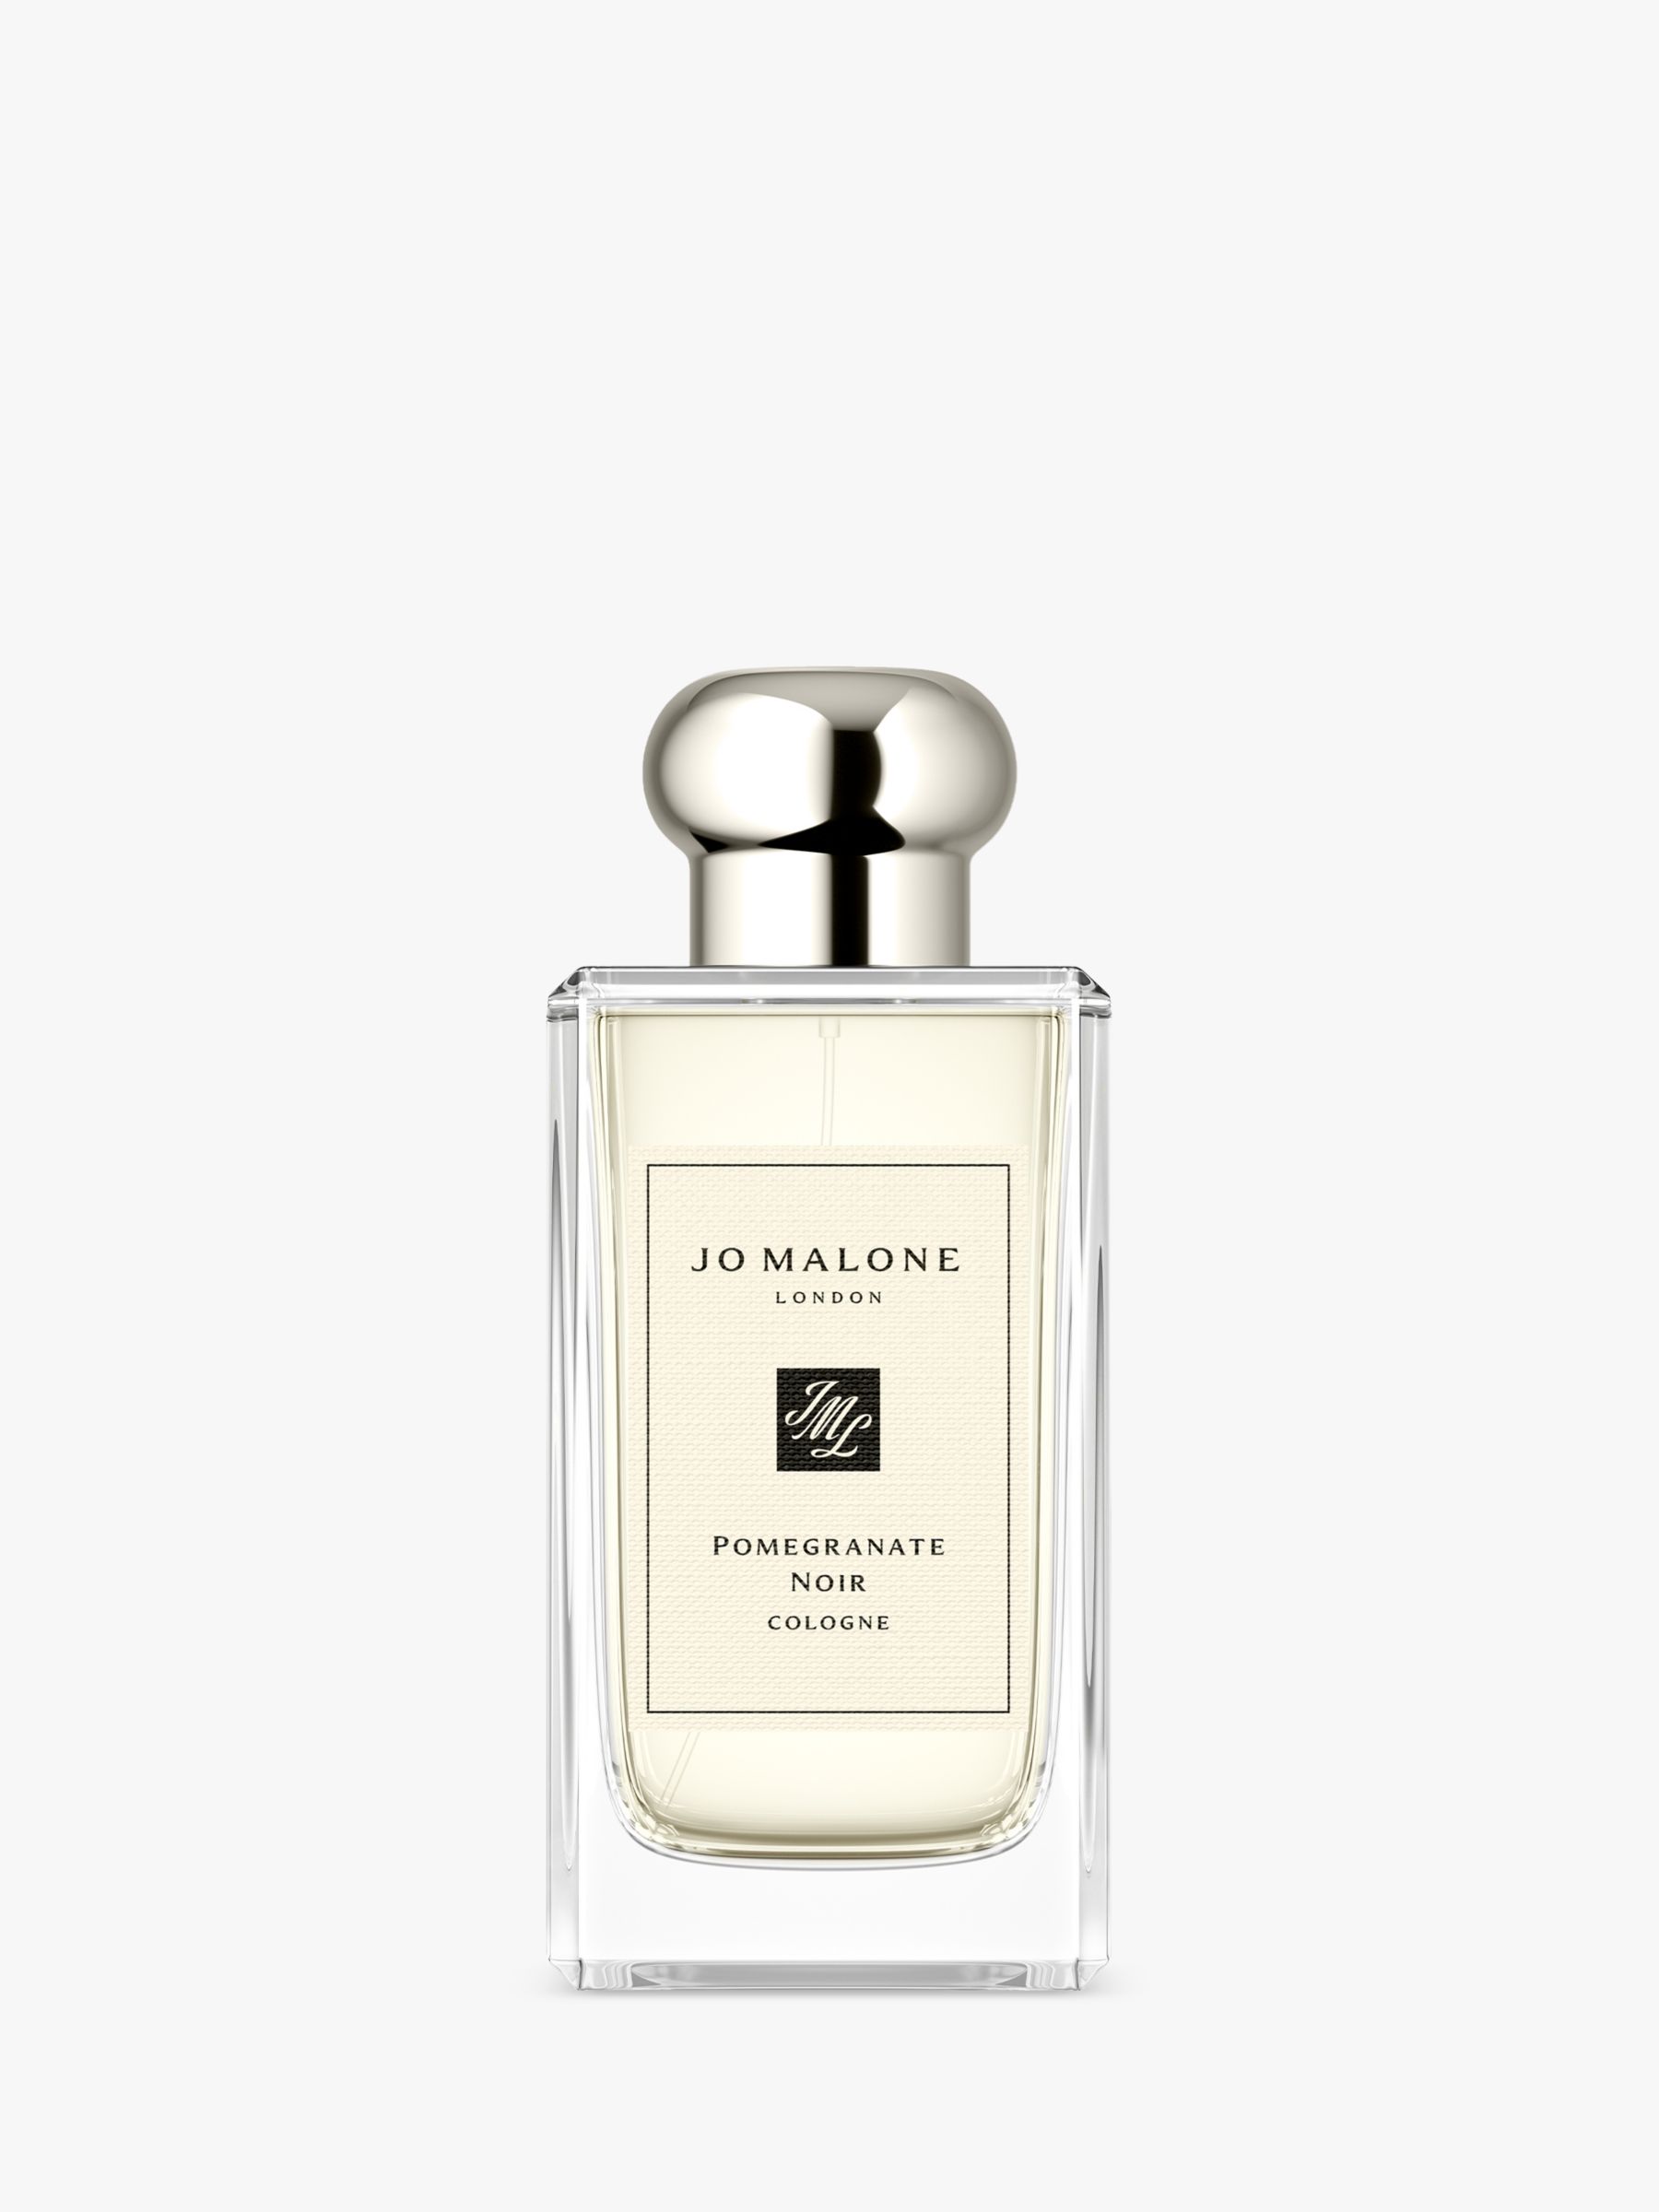 2 COCO MADEMOISELLE Eau De Parfum Perfume Sample Vial Travel 1.5